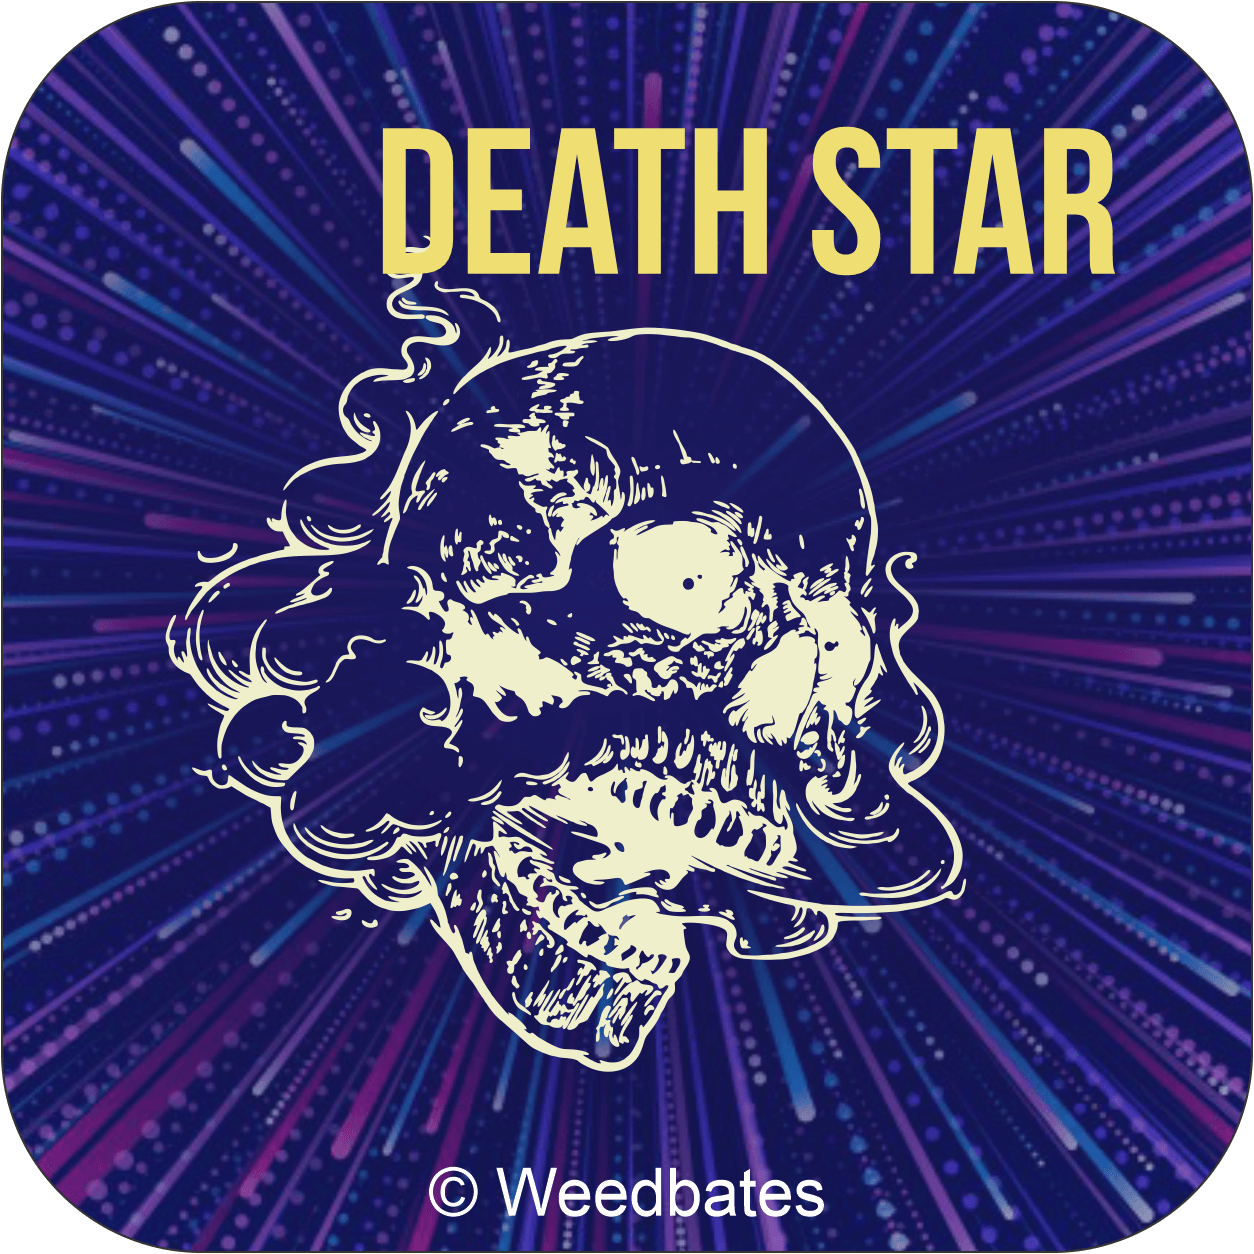 Death Star strain